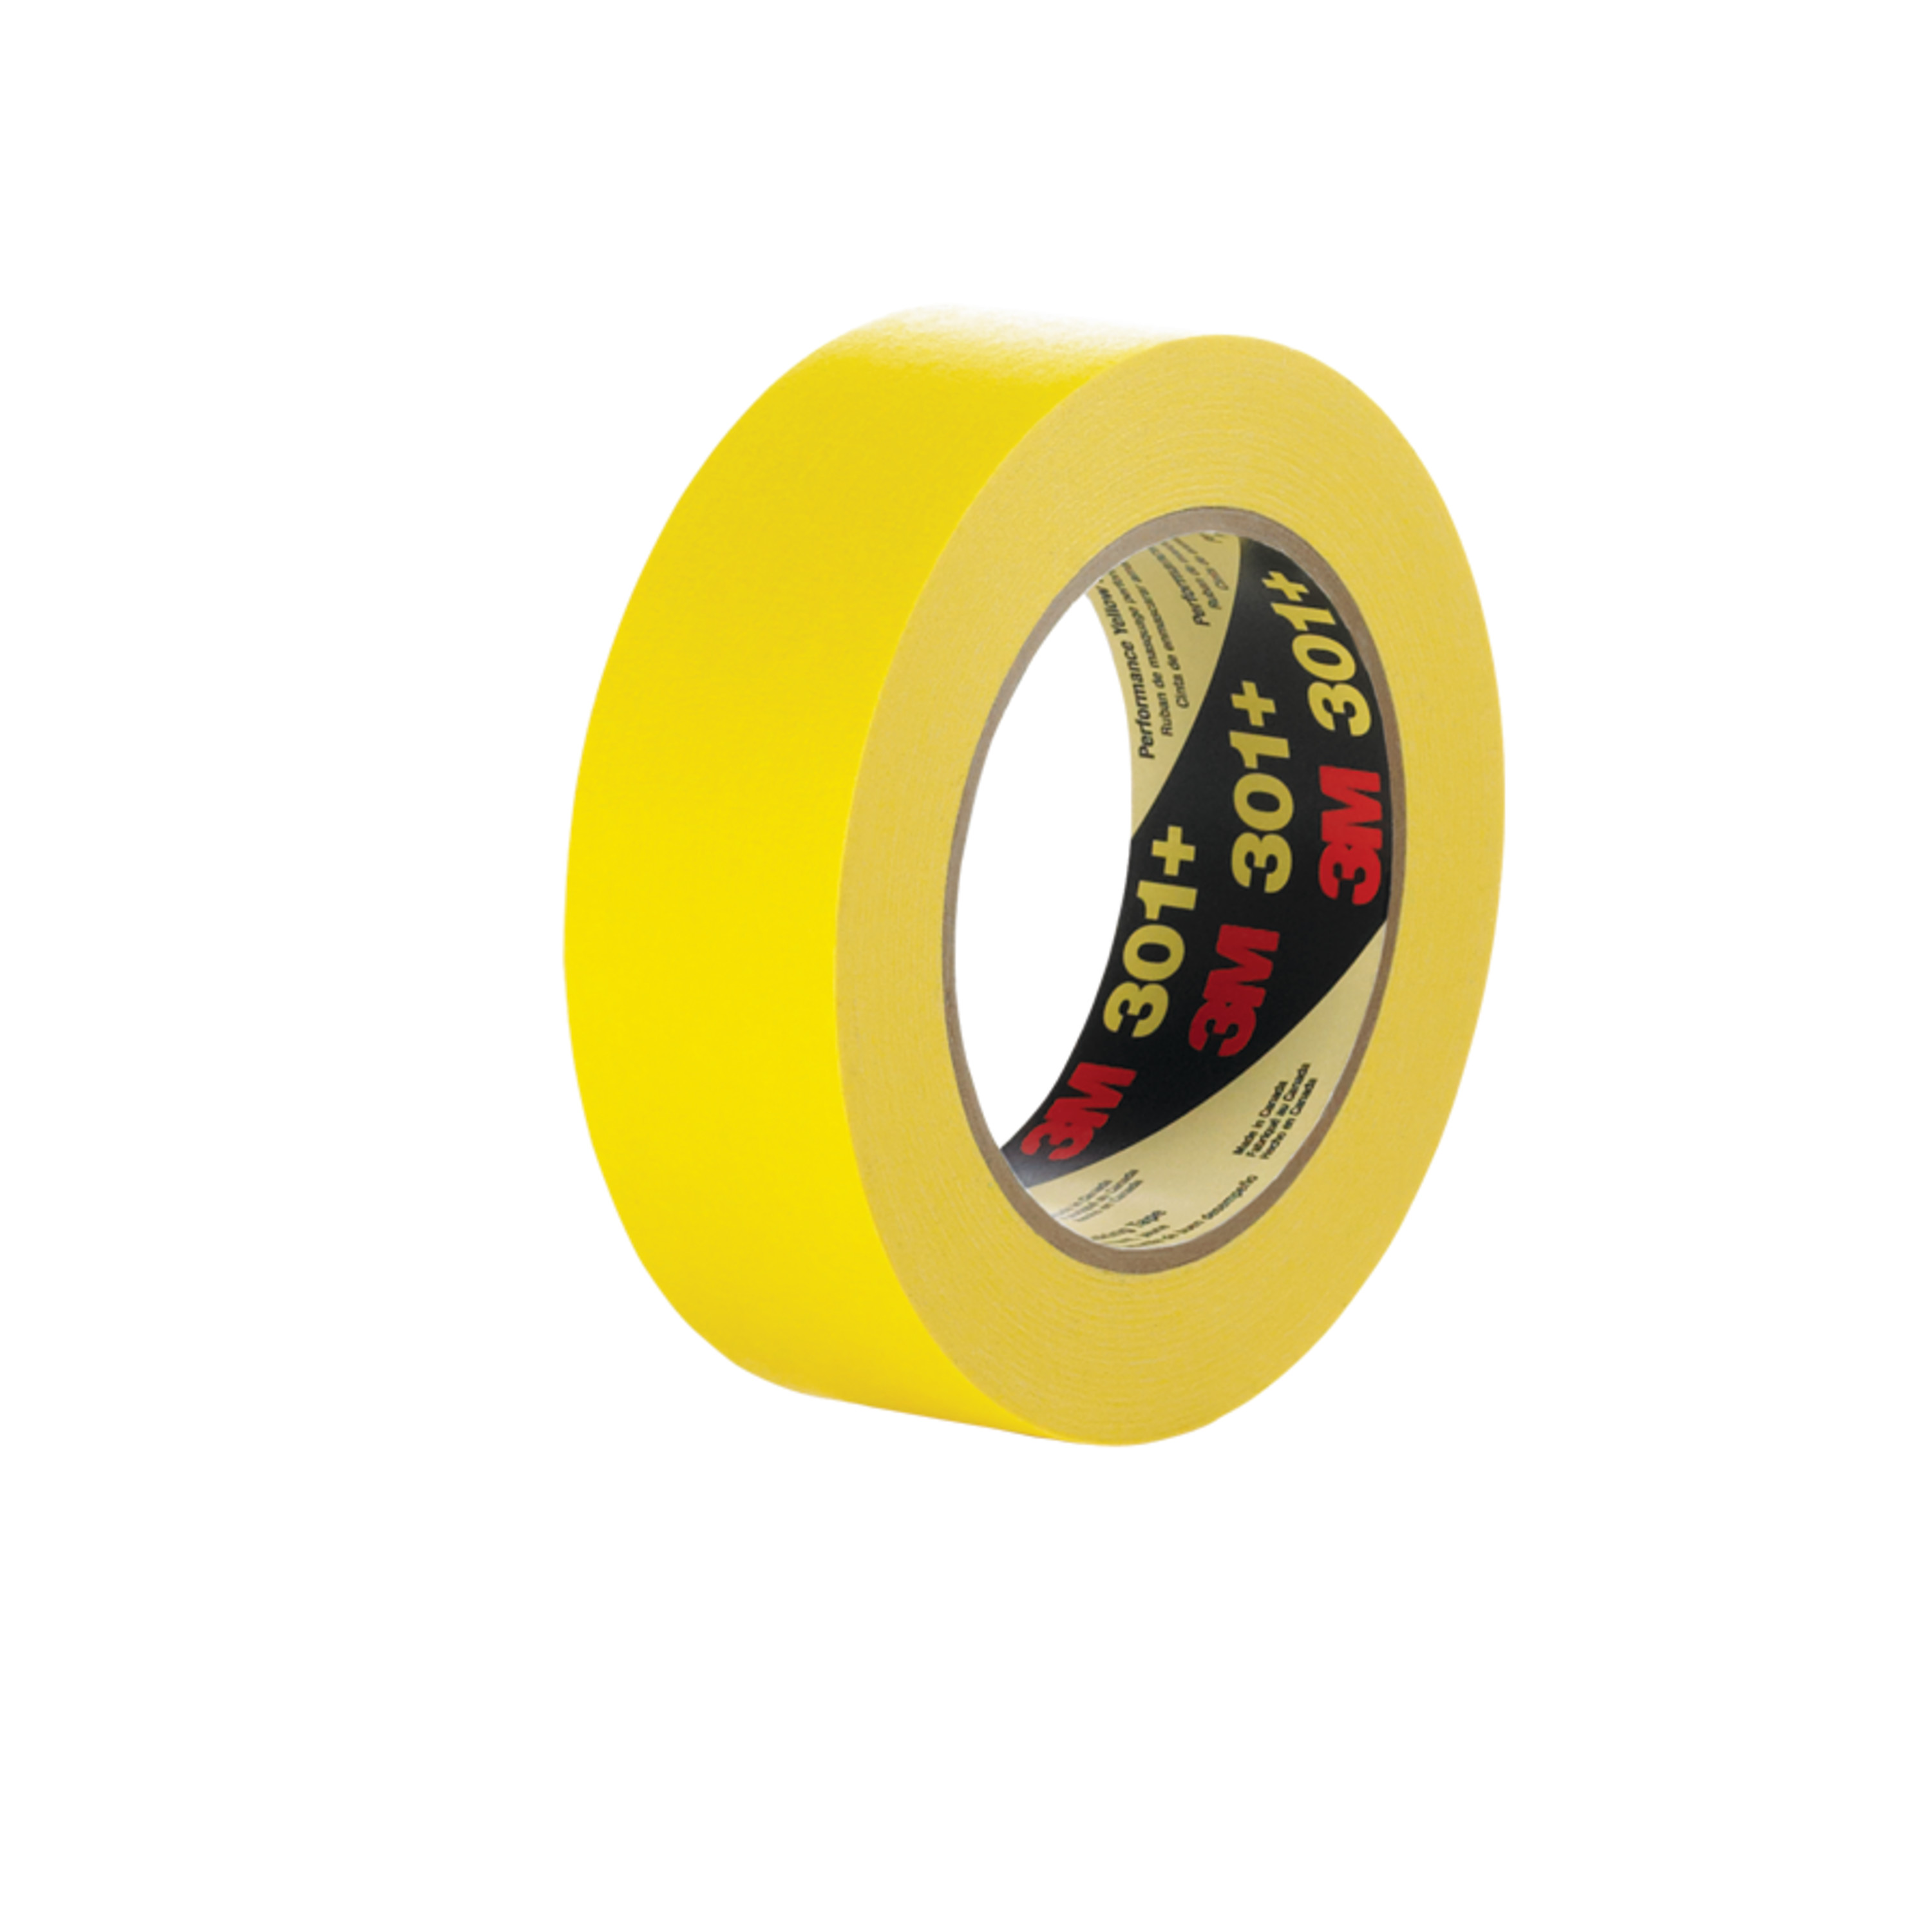 3M™ Performance Yellow Masking Tape 301+, 72 mm x 55 m, 6.3 mil, 12 per
case